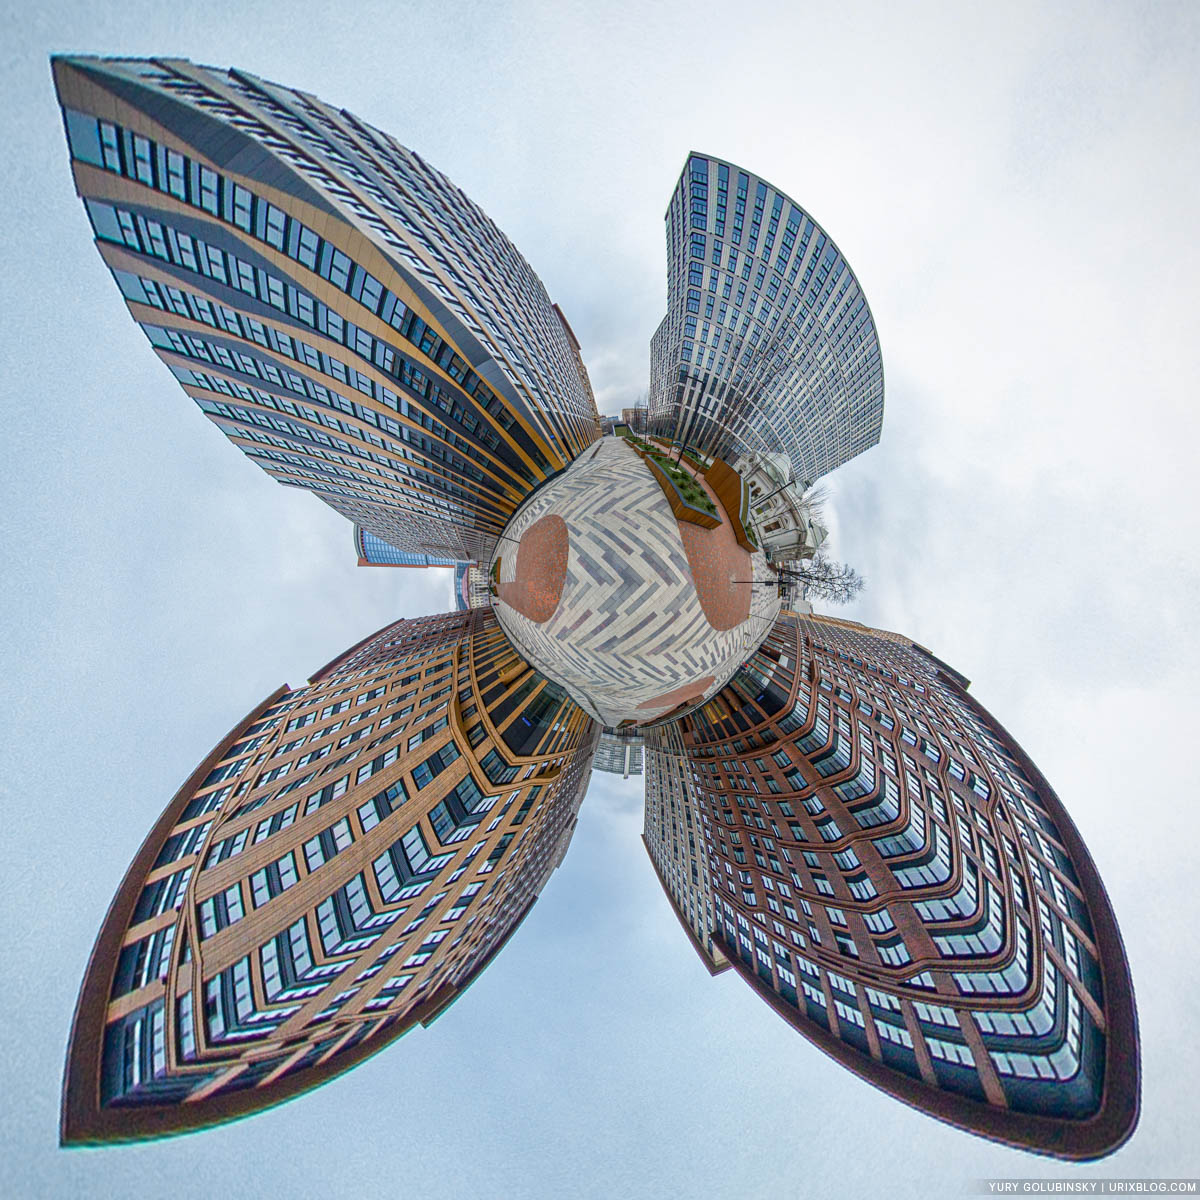 ЖК Царская Площадь, маленькая планета, панорама, Москва, Россия, 2020